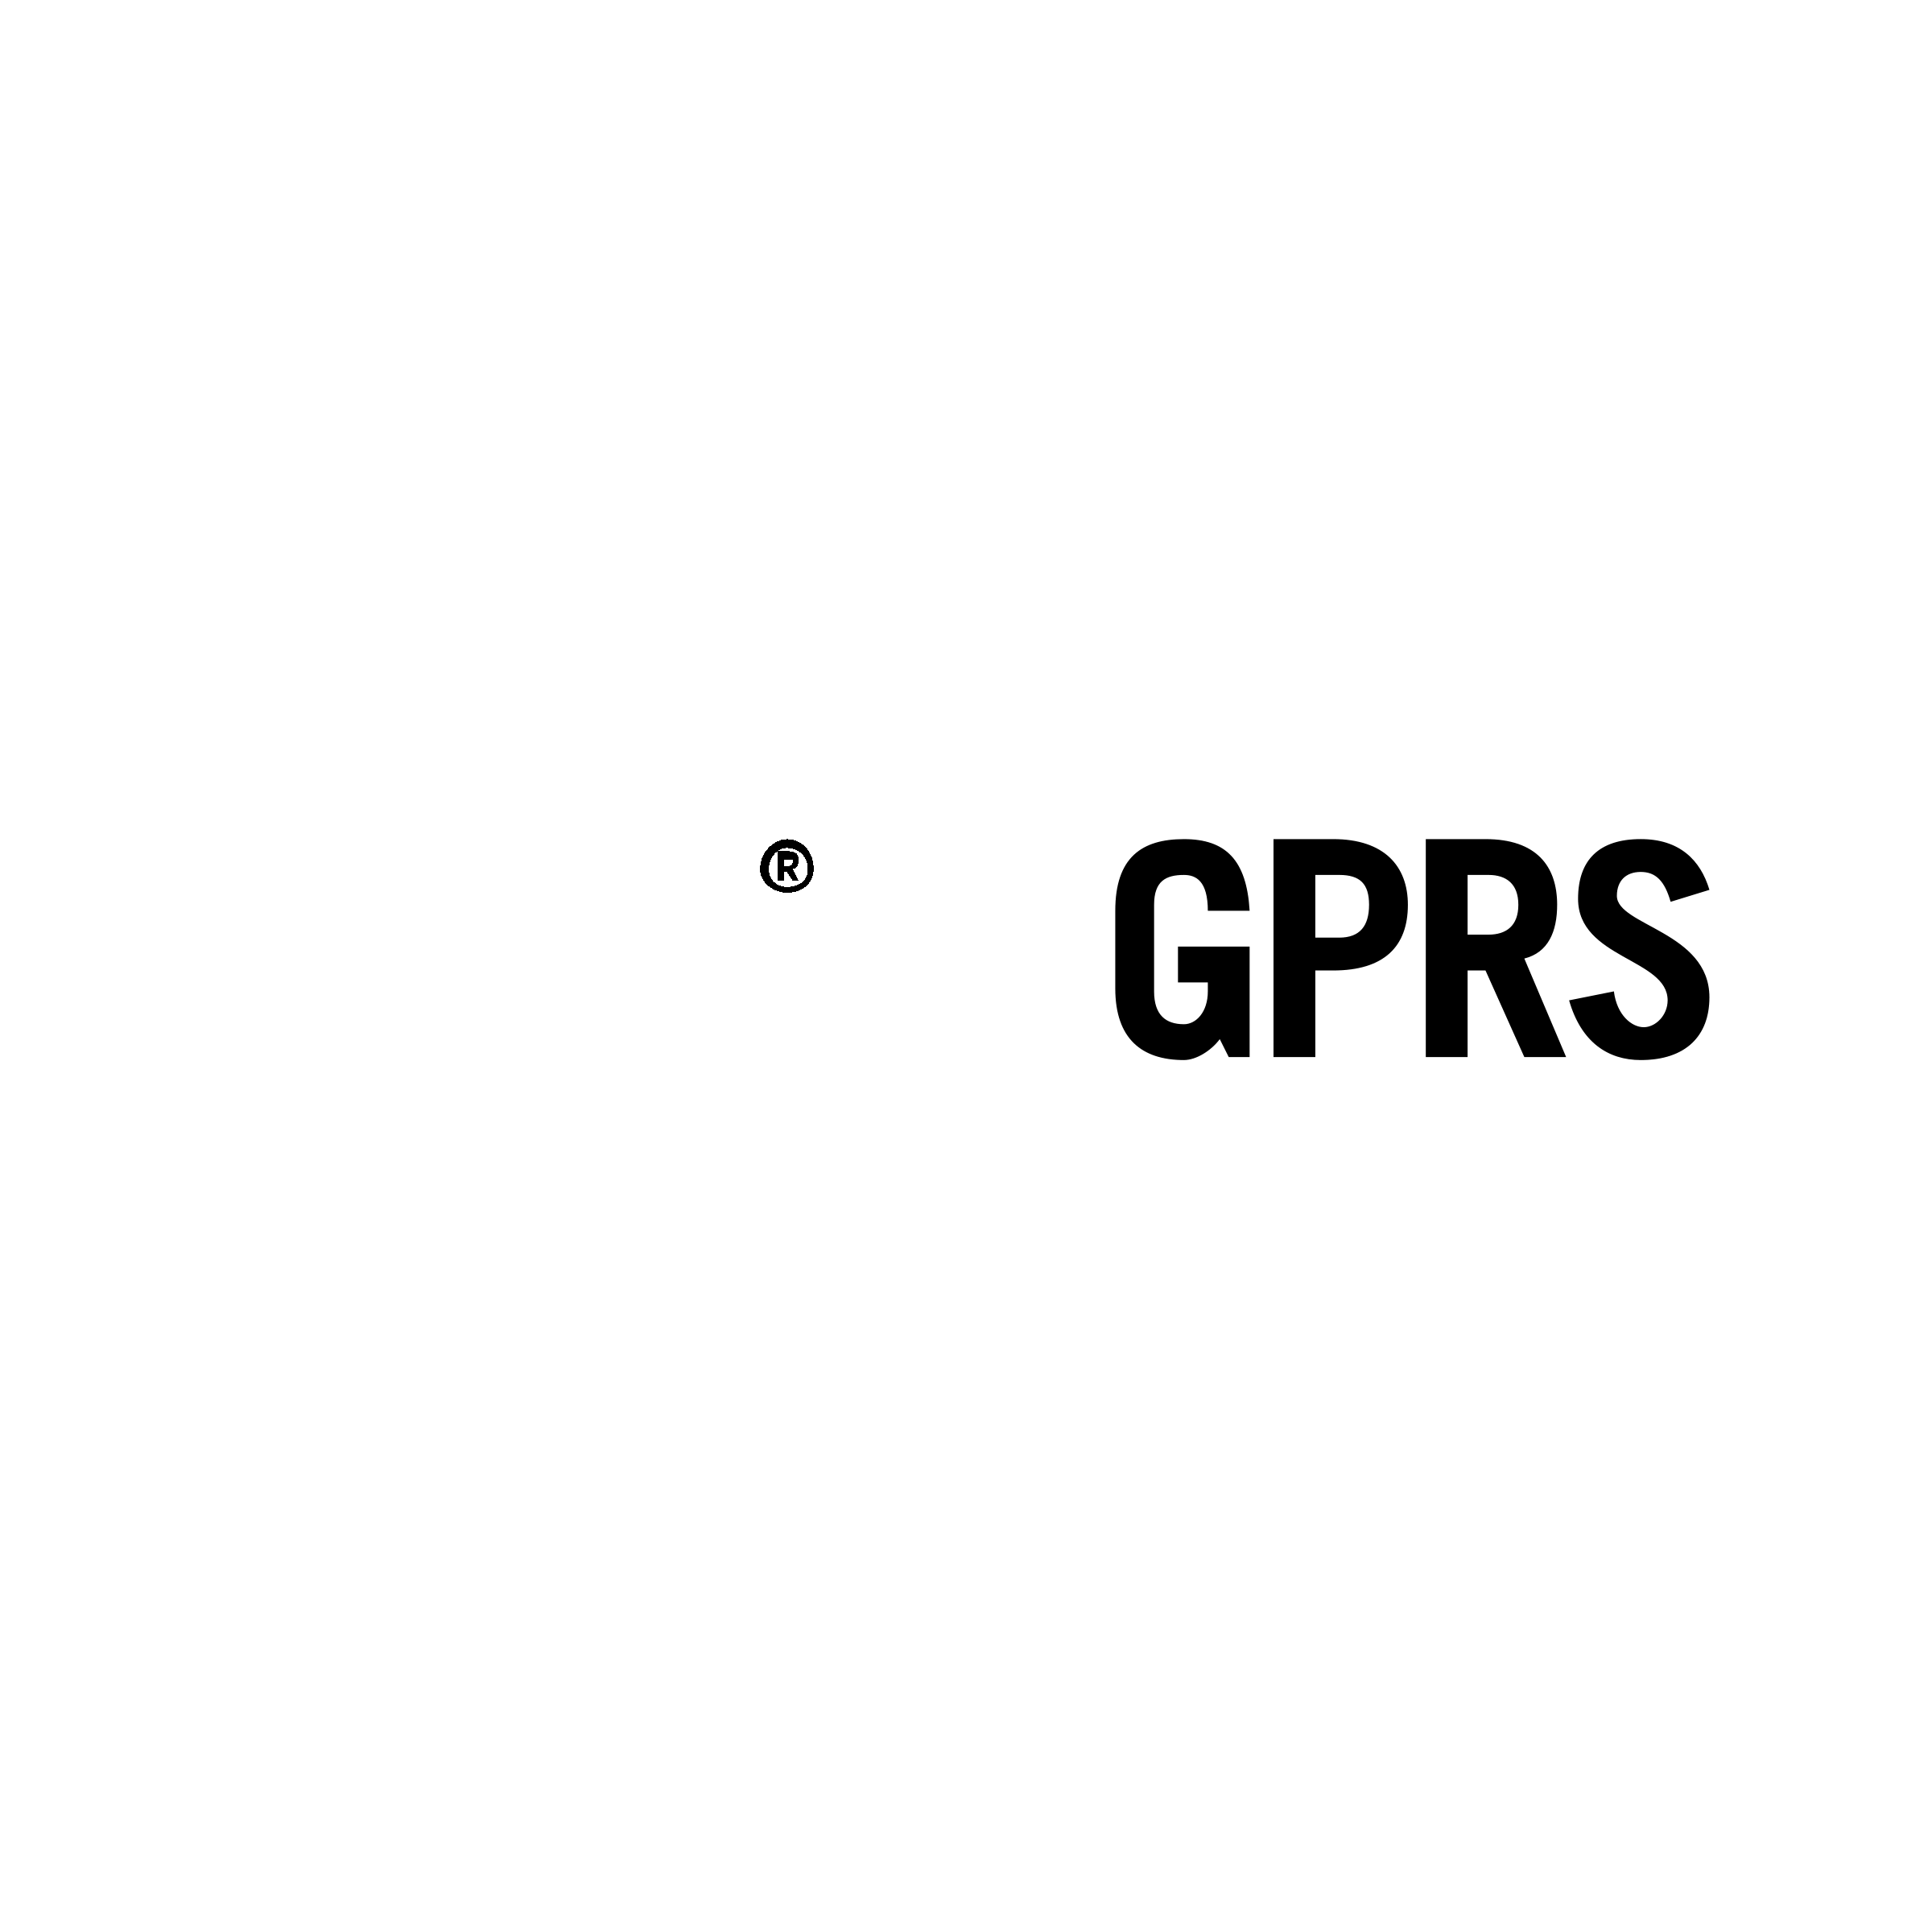 GPRS Logo - Ben GPRS Logo PNG Transparent & SVG Vector - Freebie Supply